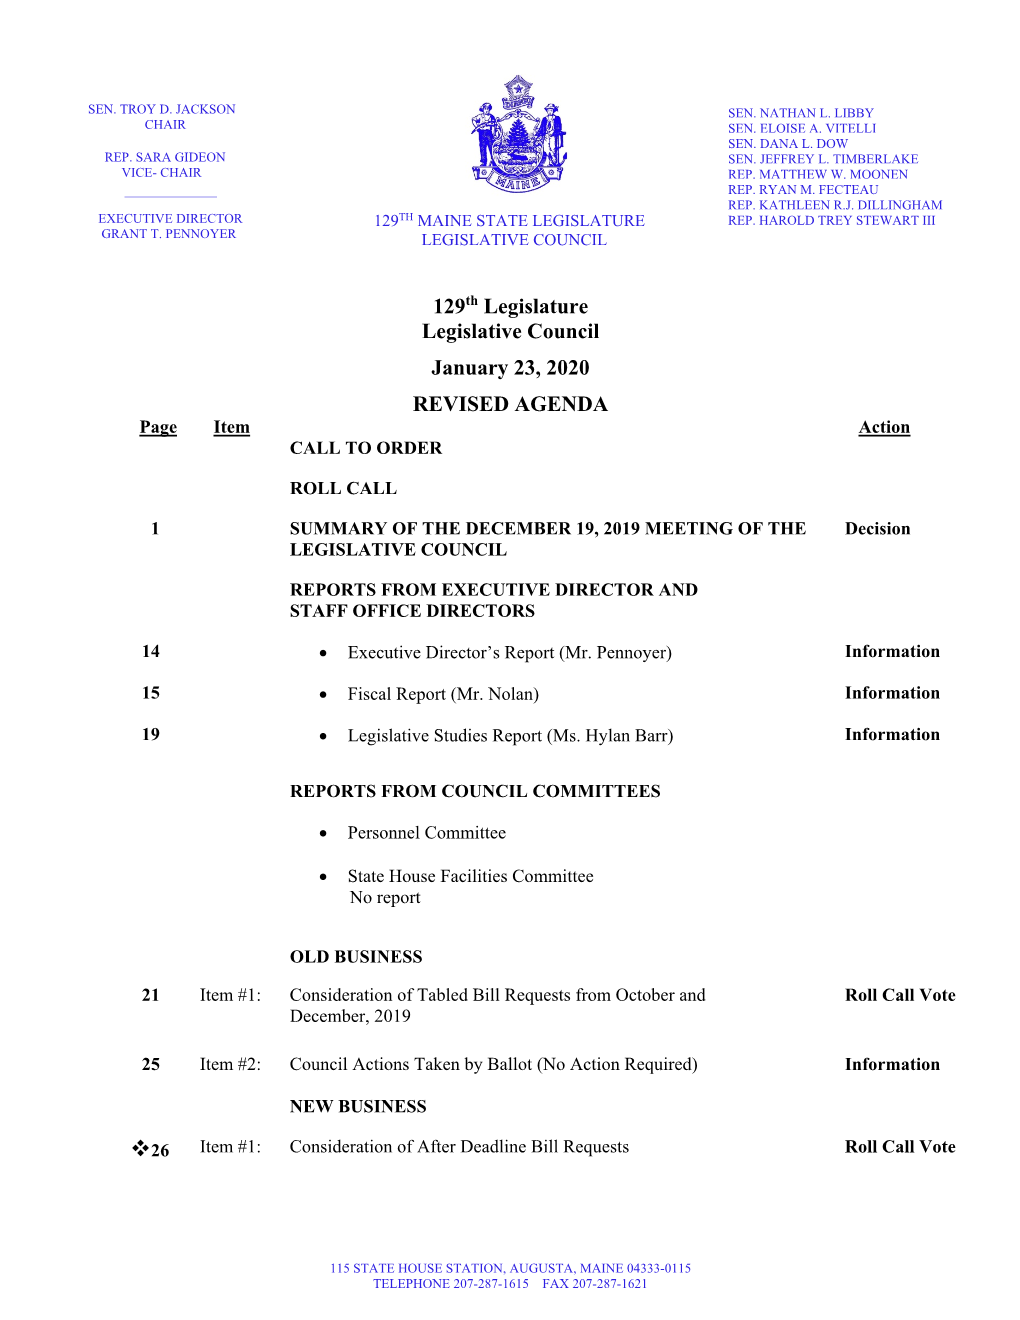 Legislative Council Agenda Packet Revised, 1-23-2020